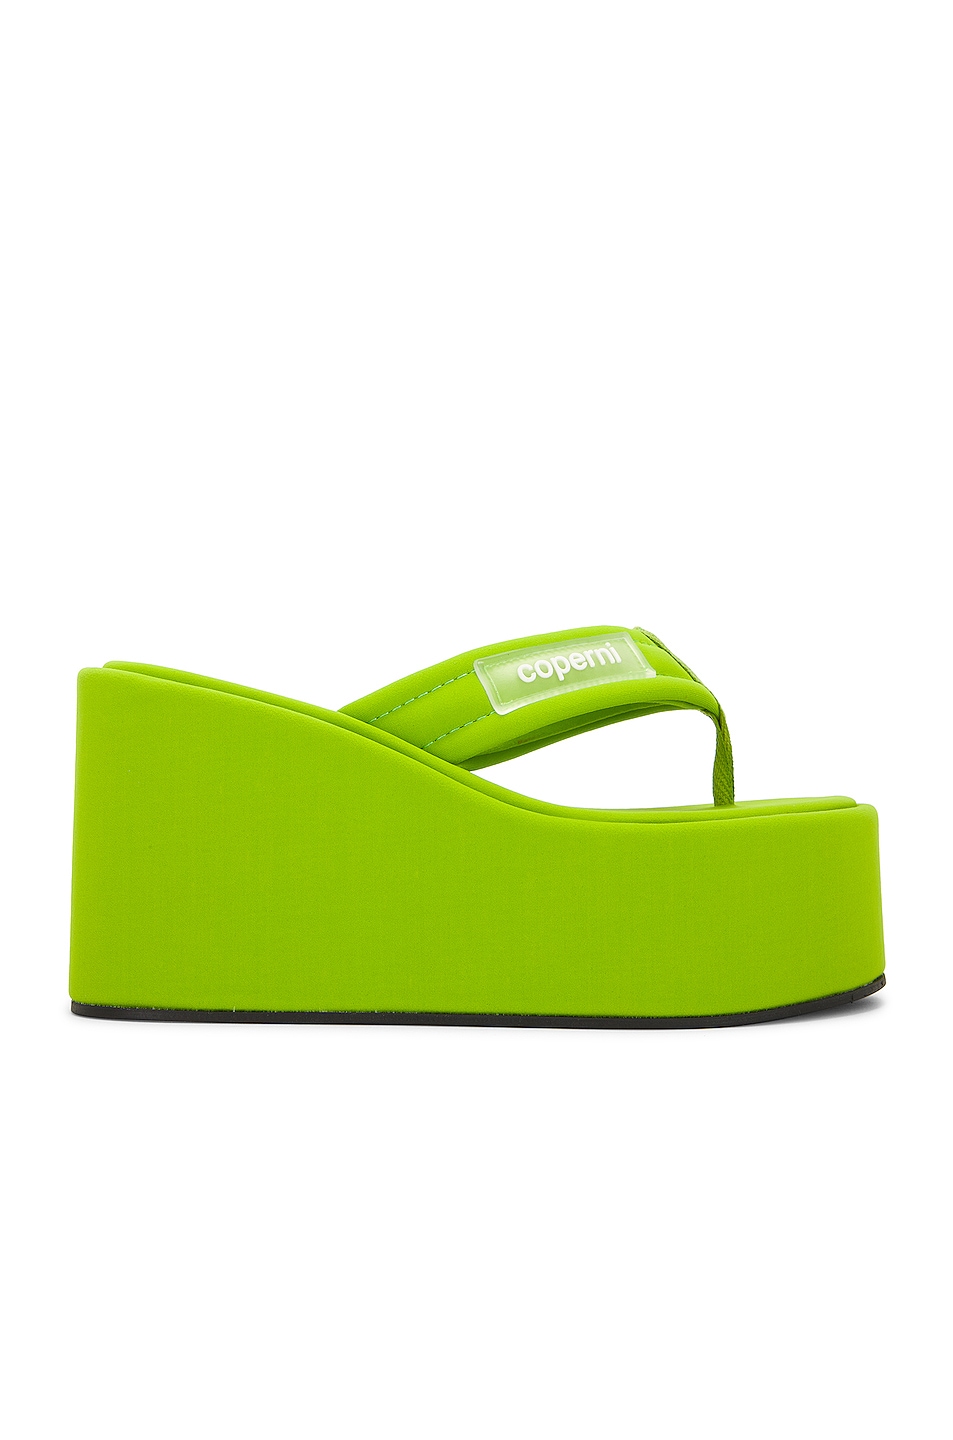 Image 1 of Coperni Branded Wedge Sandal in Apple Green